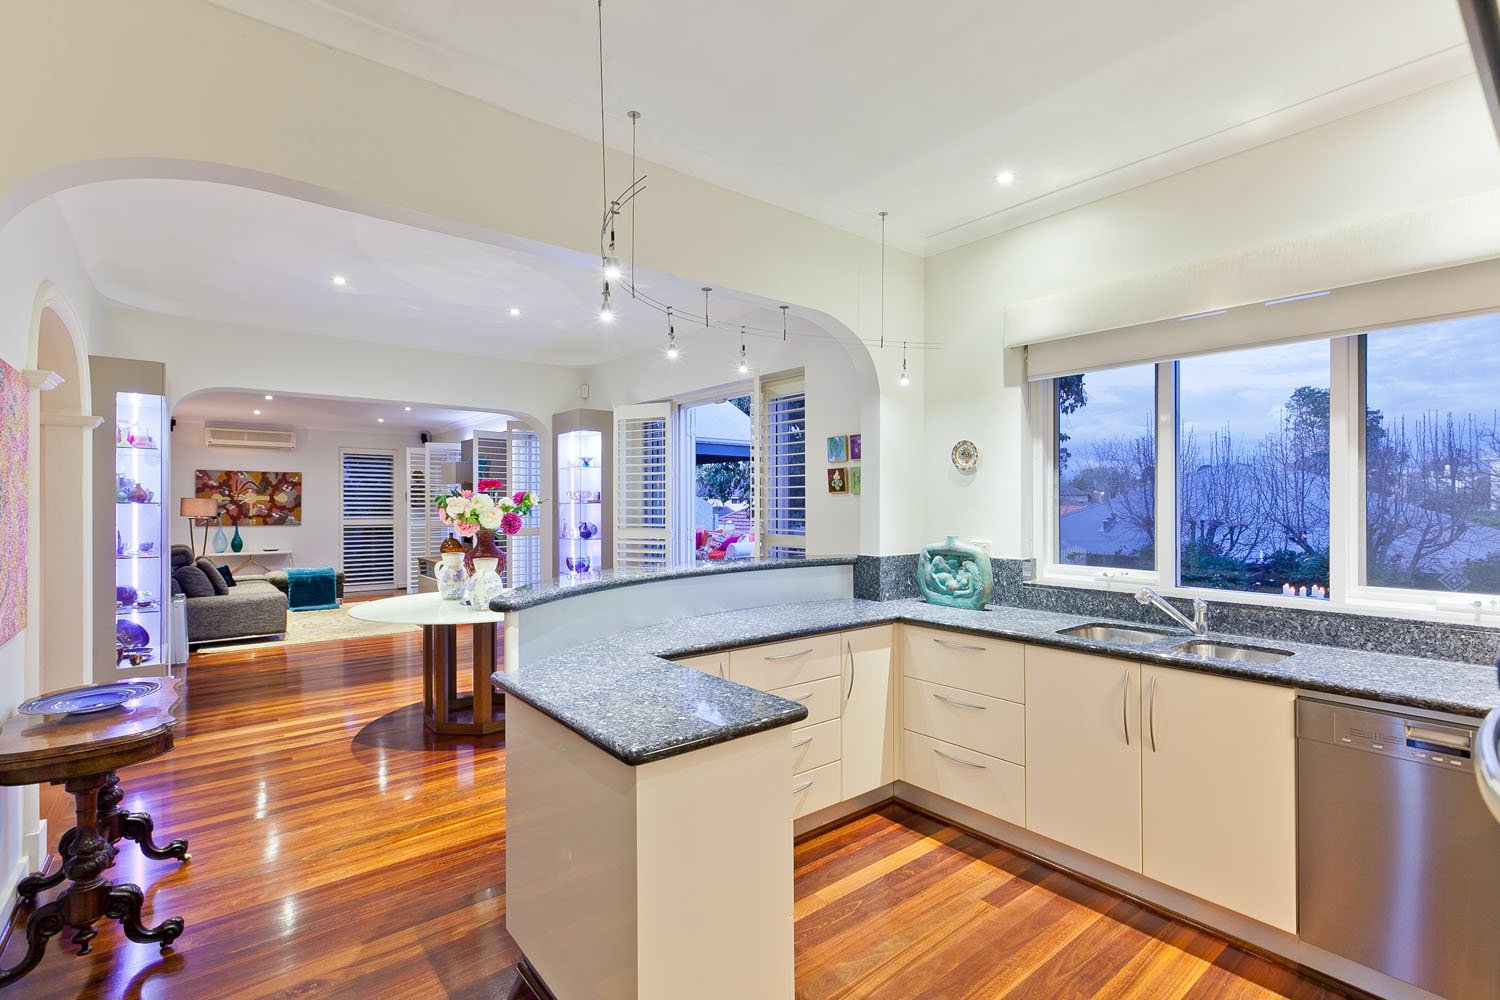 applecross-residence-perth-architecture-design-designer-building-residential-kitchen-interior.jpg